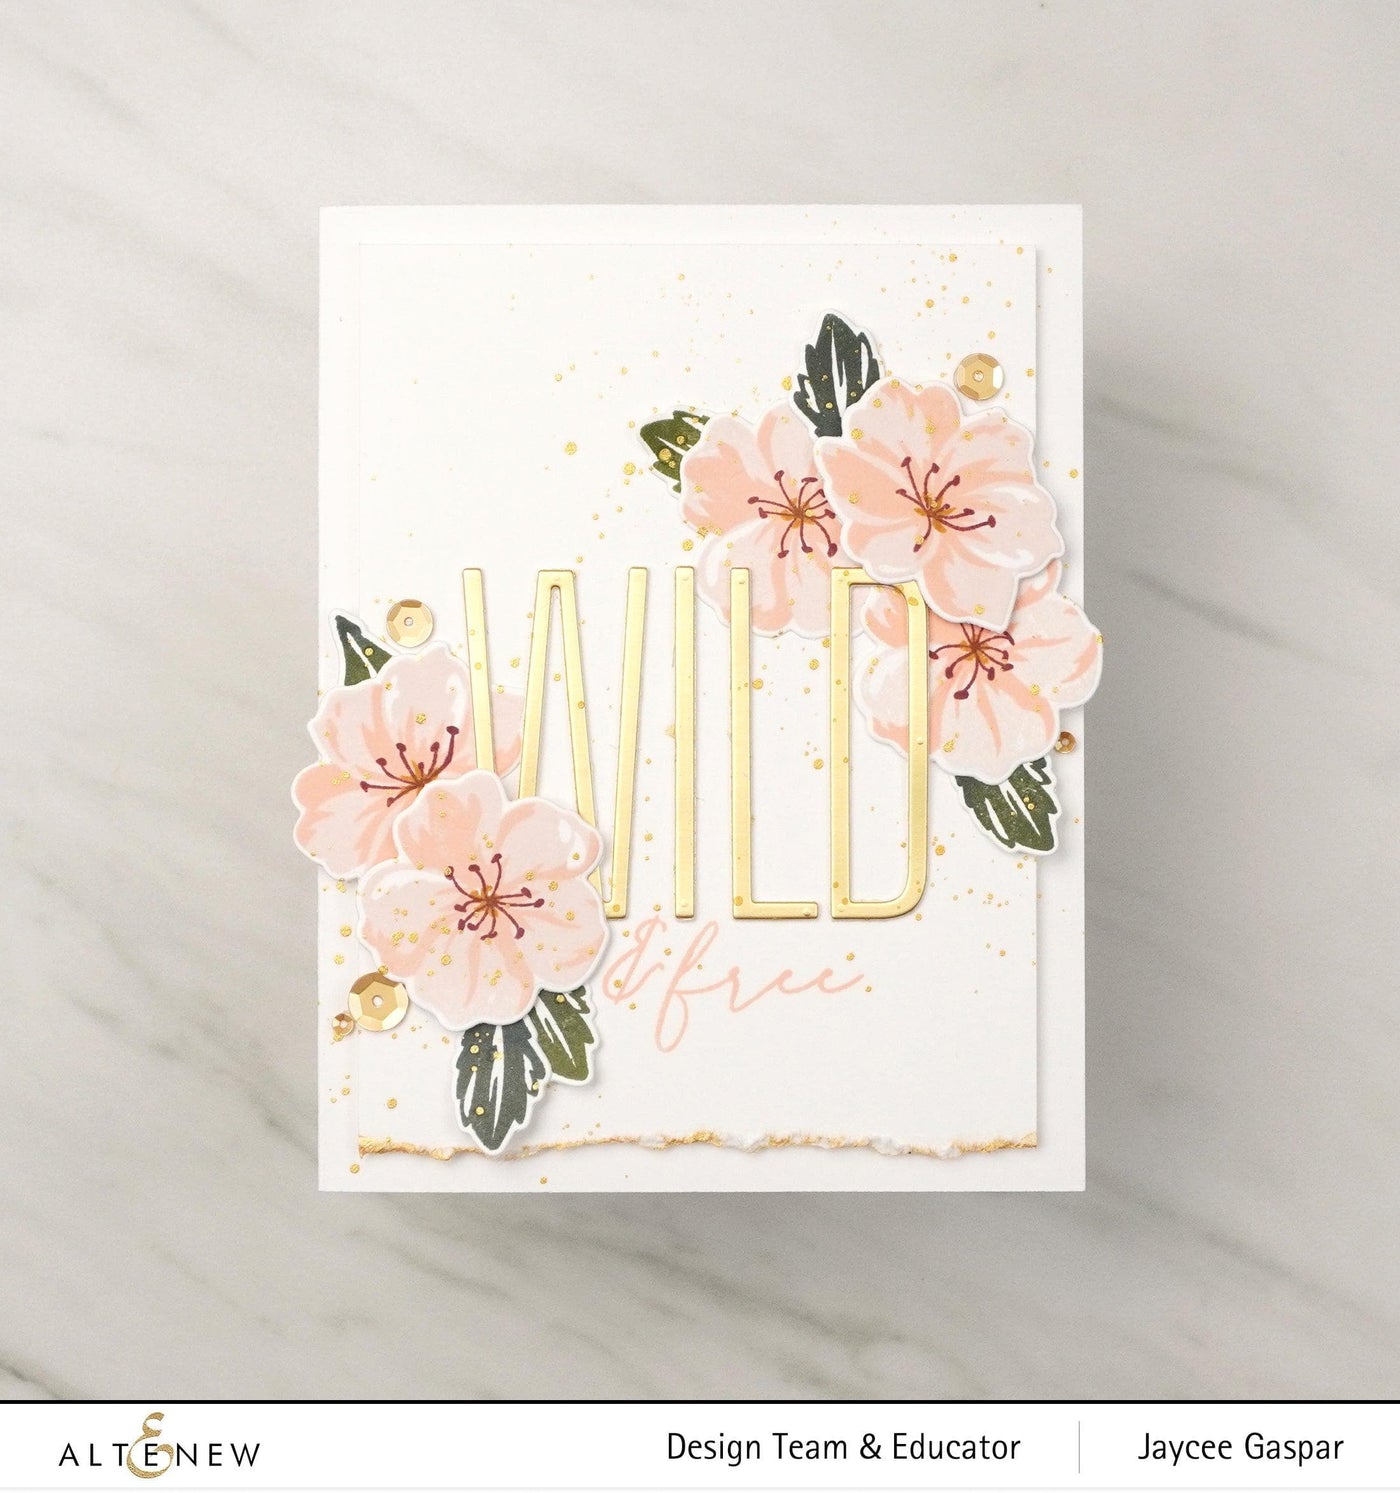 Altenew Mini Delight Mini Delight: Wild Geraniums Stamp & Die Set